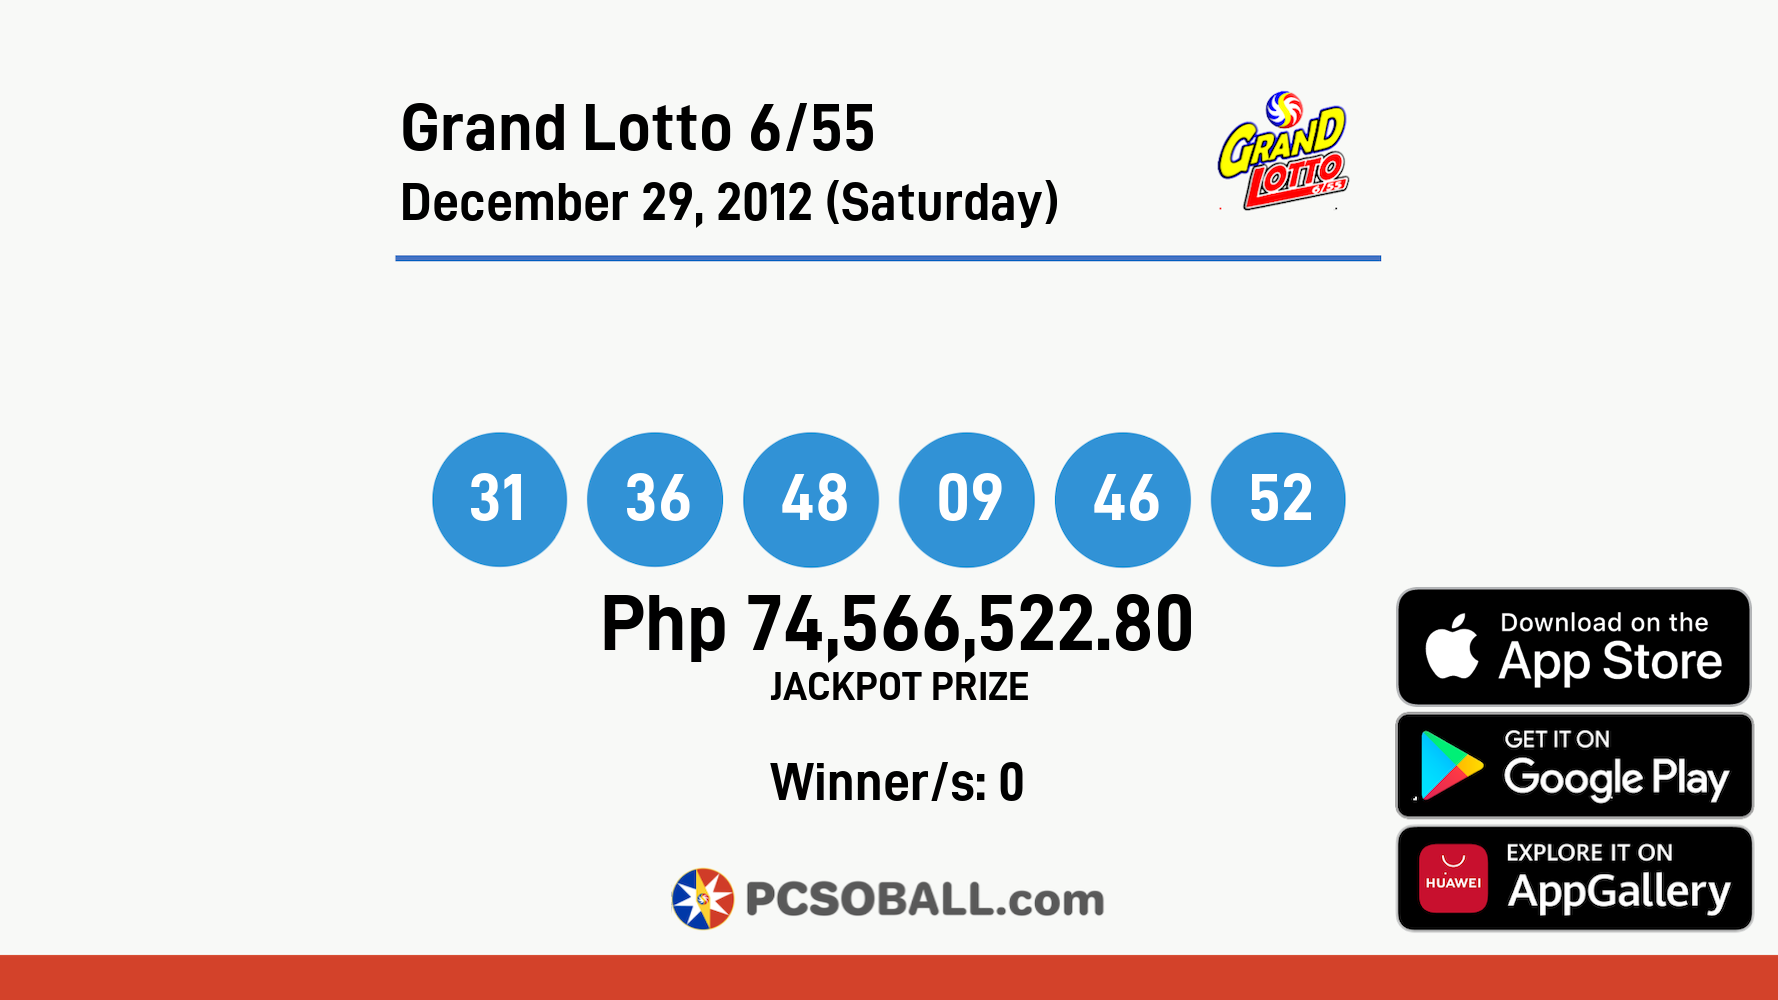 Grand Lotto 6/55 December 29, 2012 (Saturday) Result